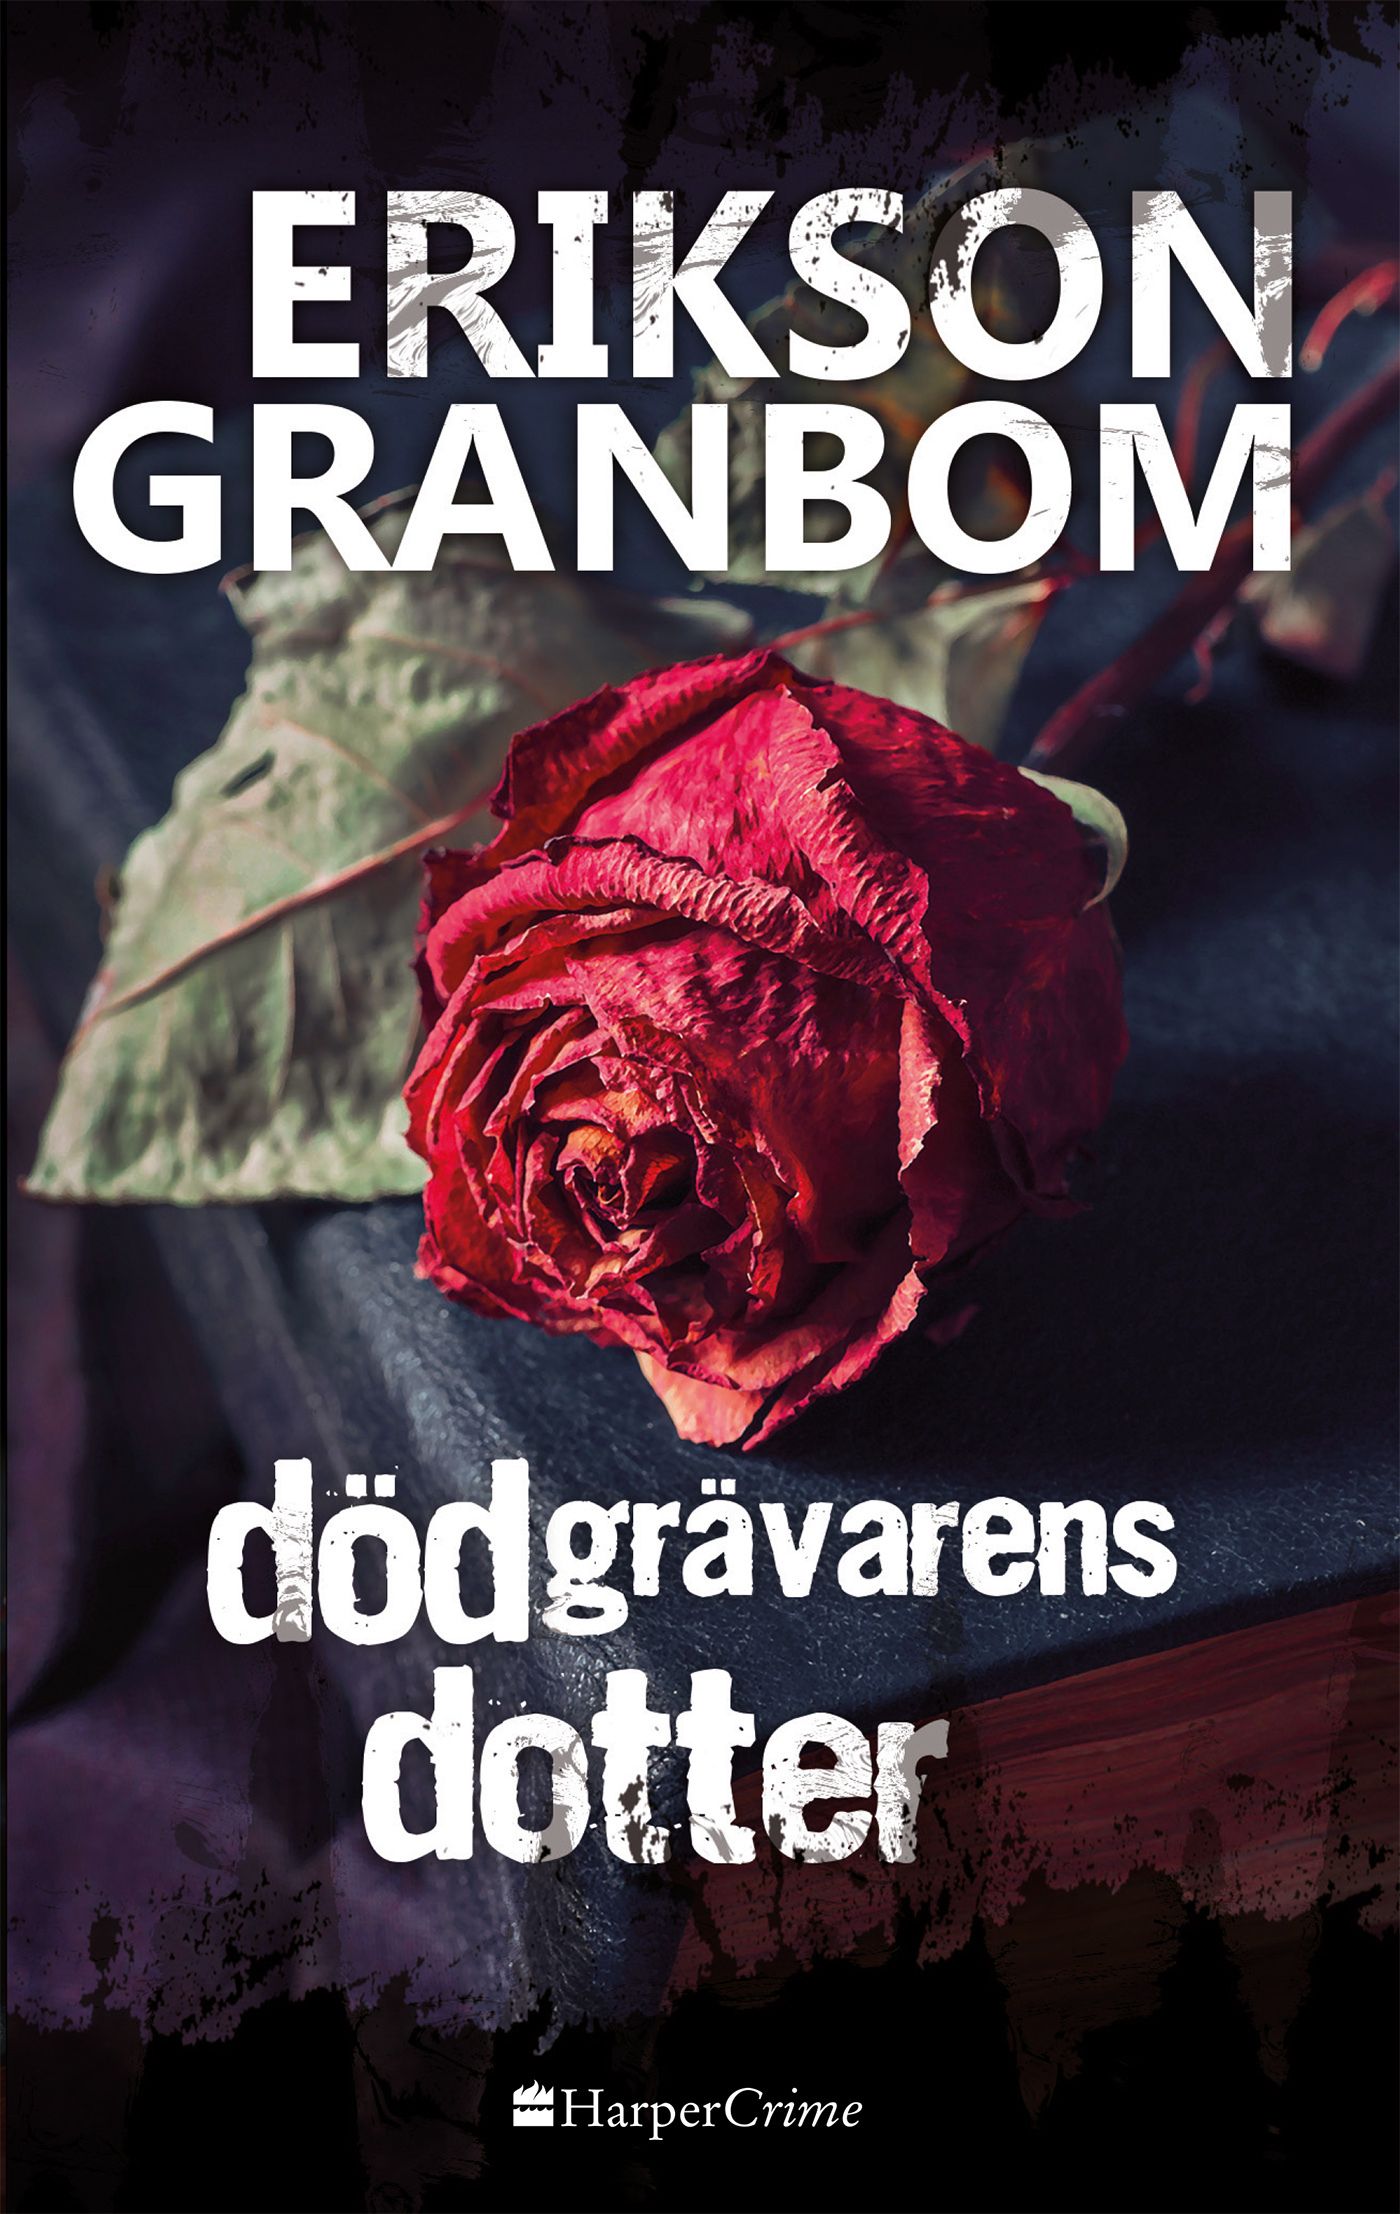 Dödgrävarens dotter, e-bog af Thomas Erikson, Christina Granbom